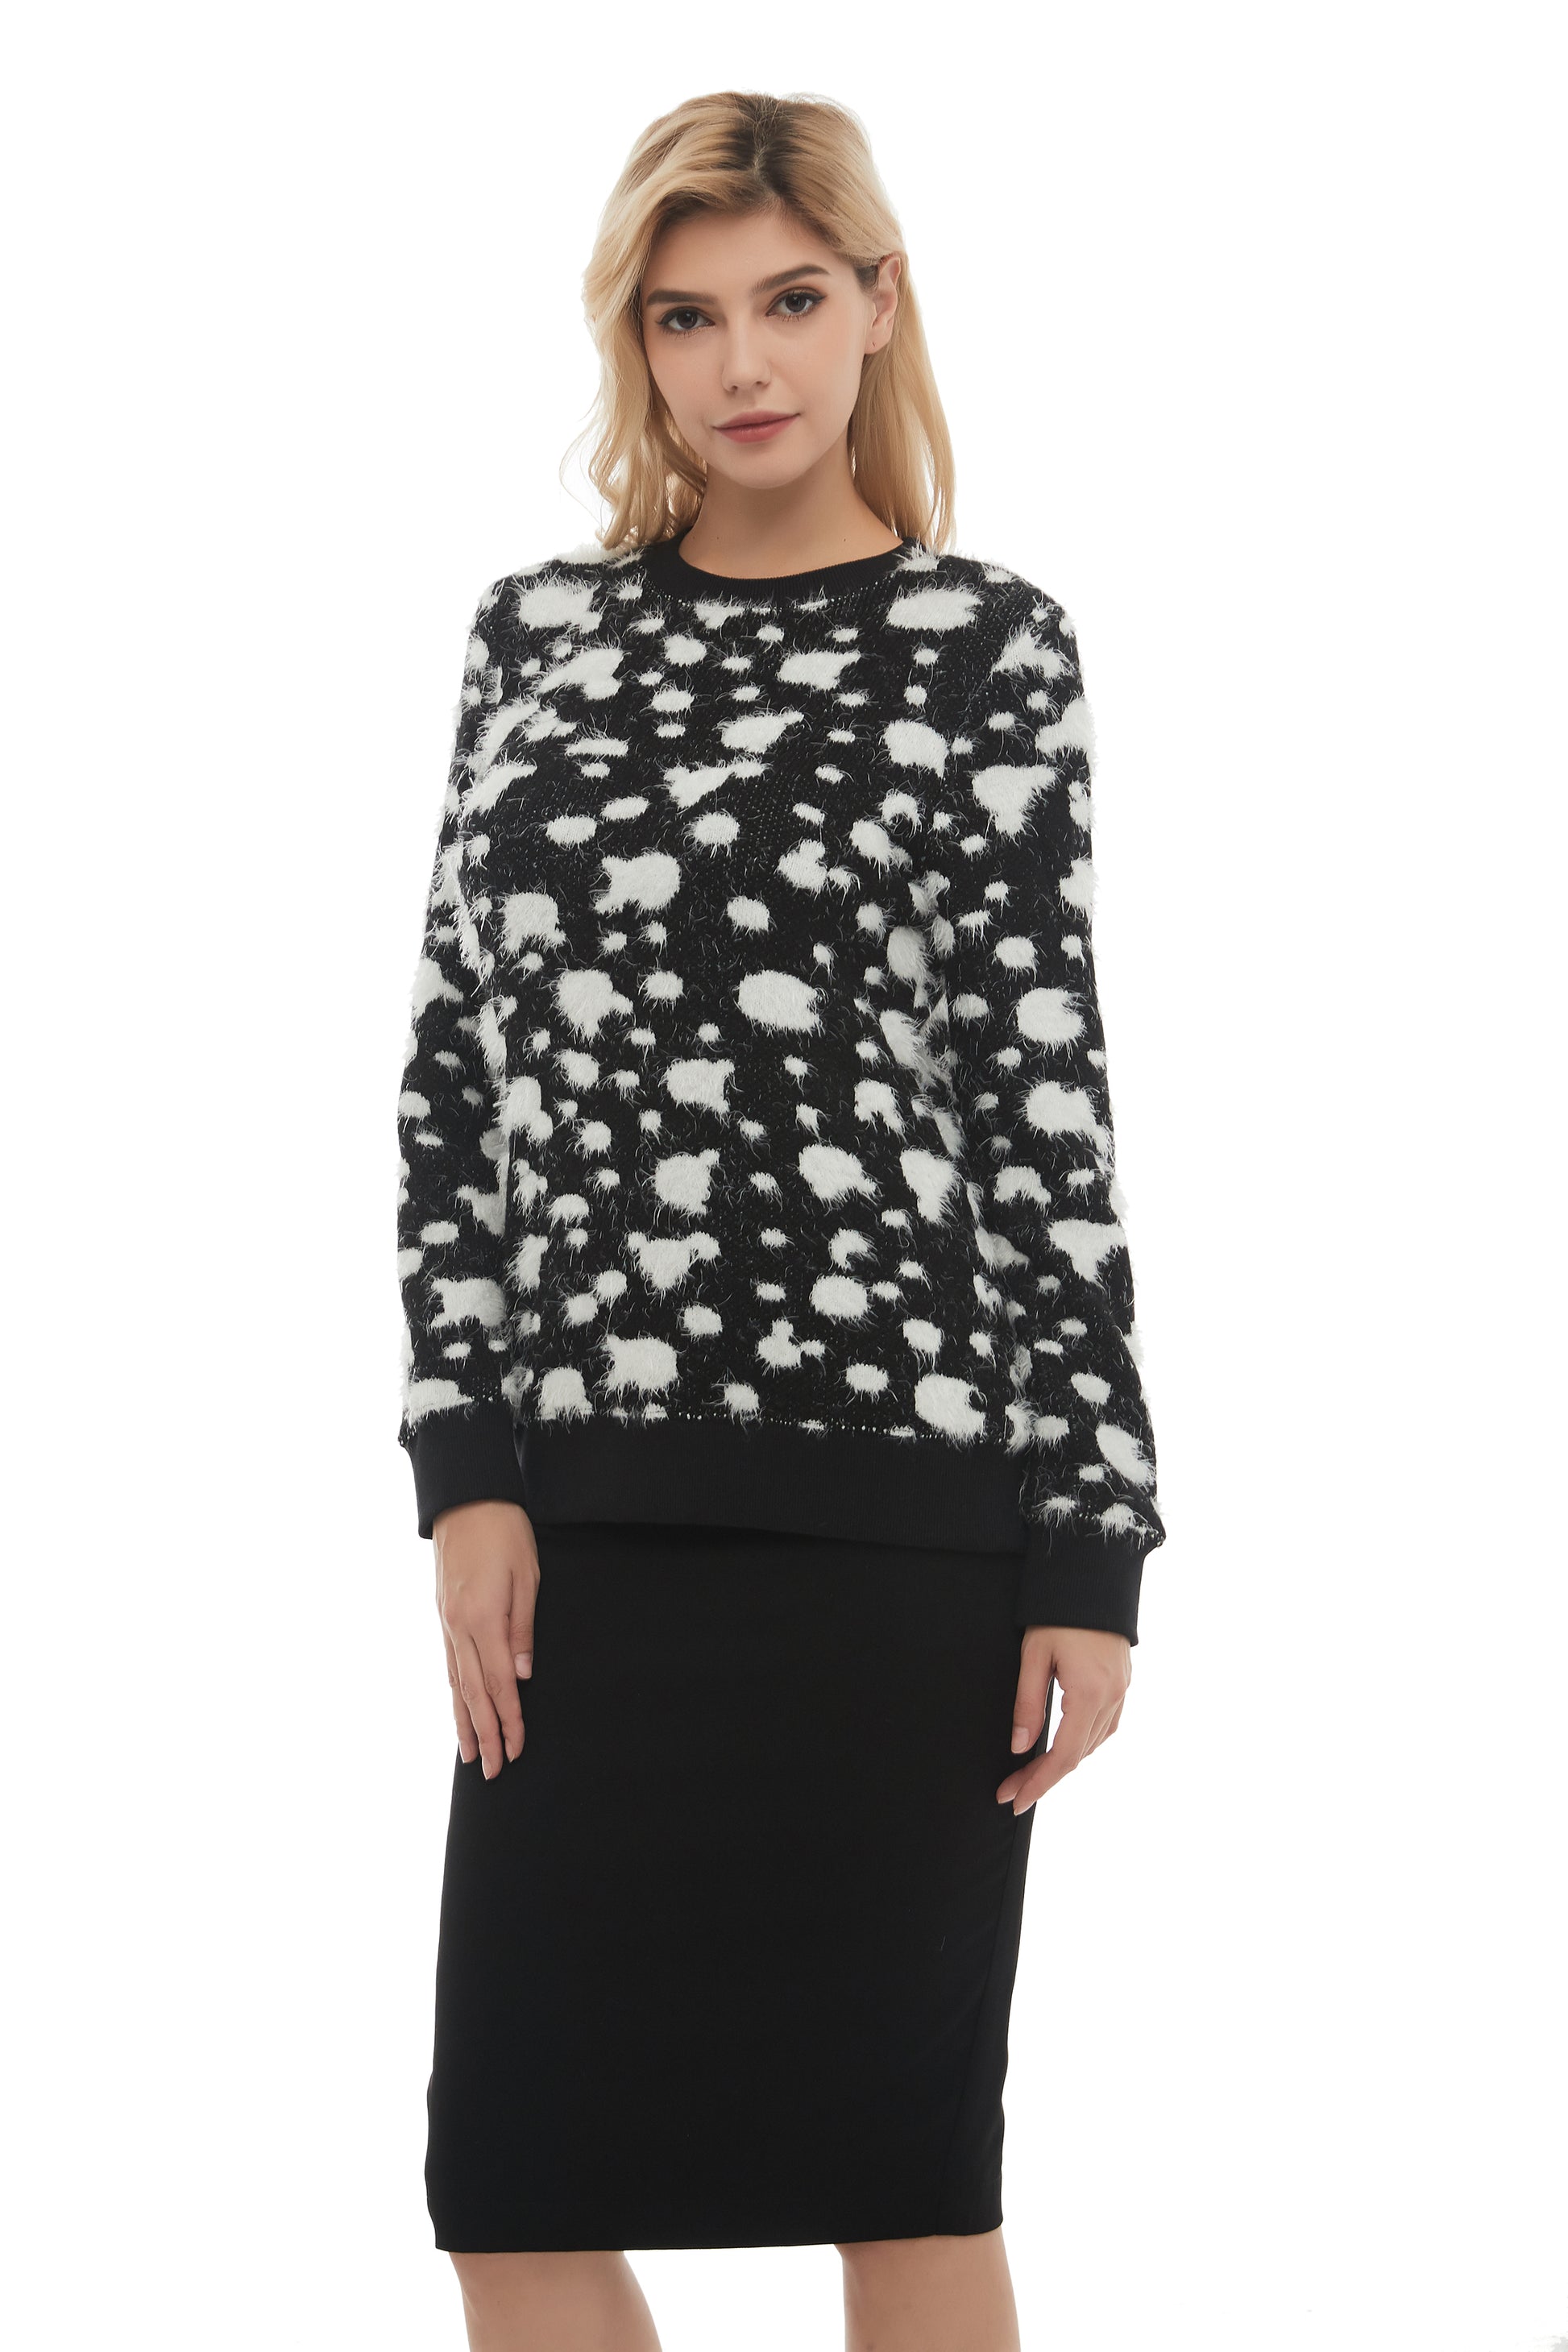 Long Sleeve Modest Mohair Black & White Sweater Top - alamaud